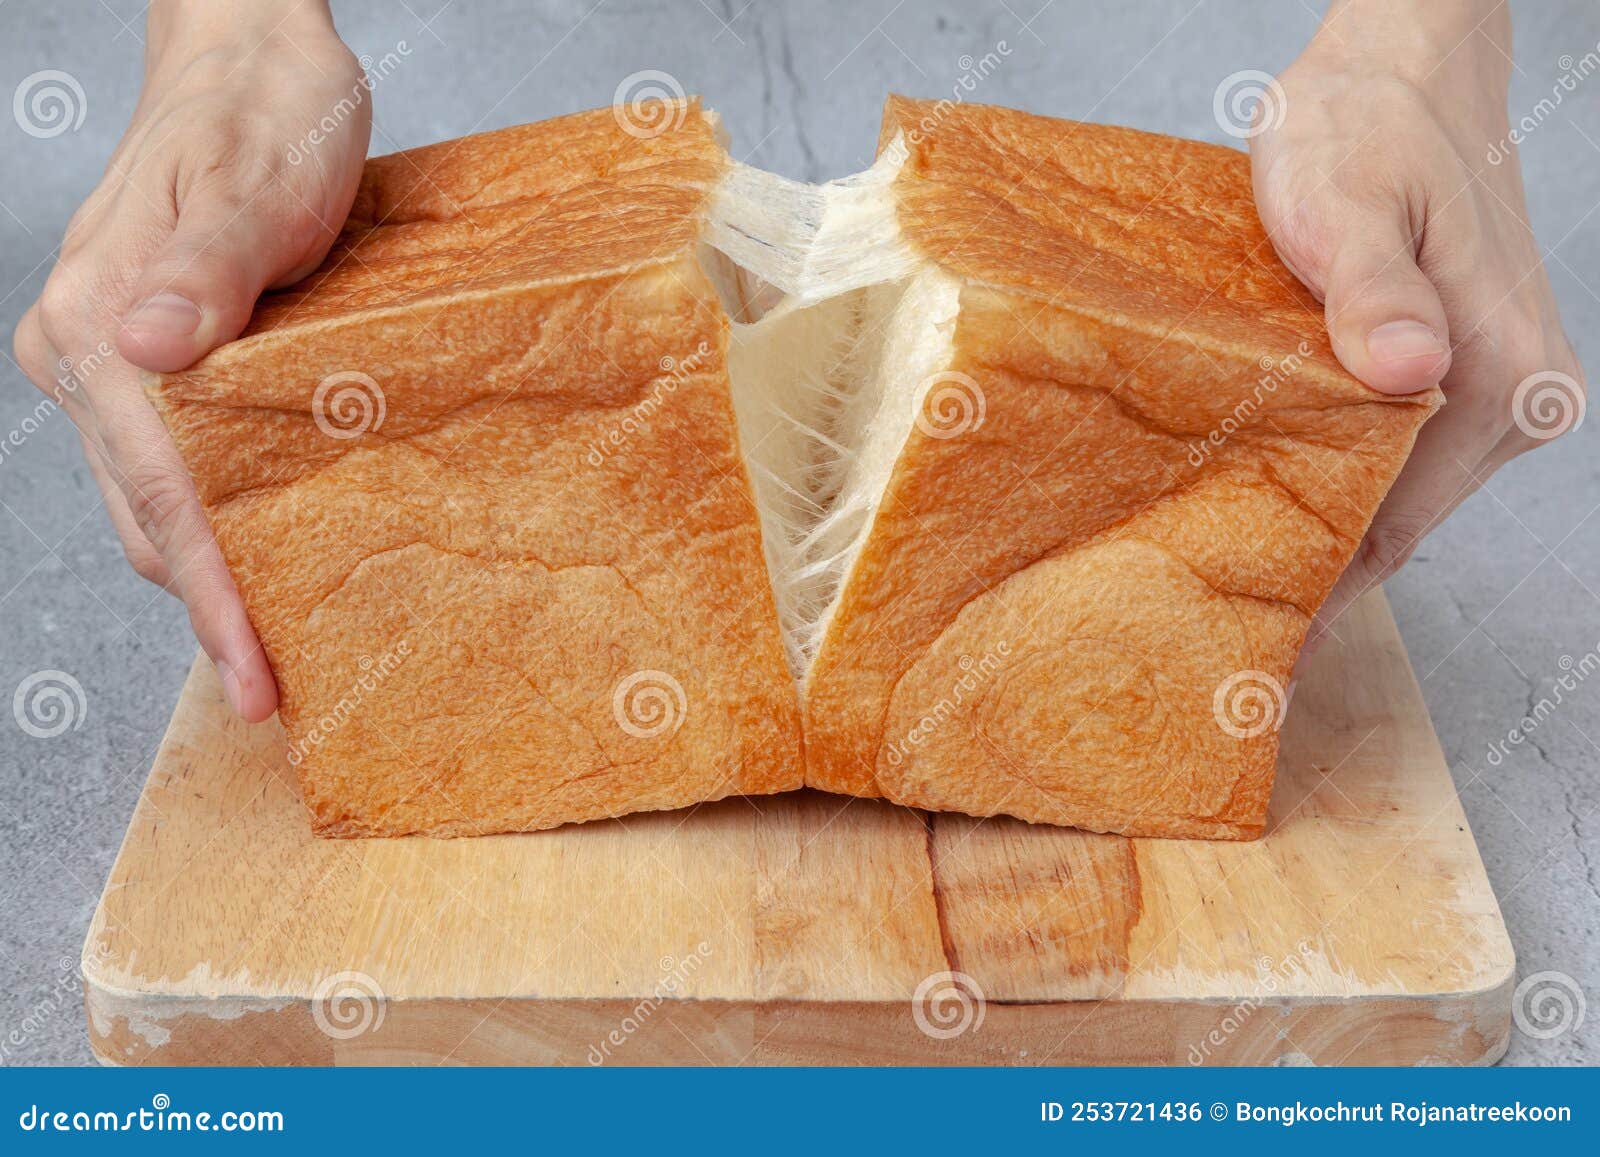 nama shokupan or japanese bread loaf on wooden board